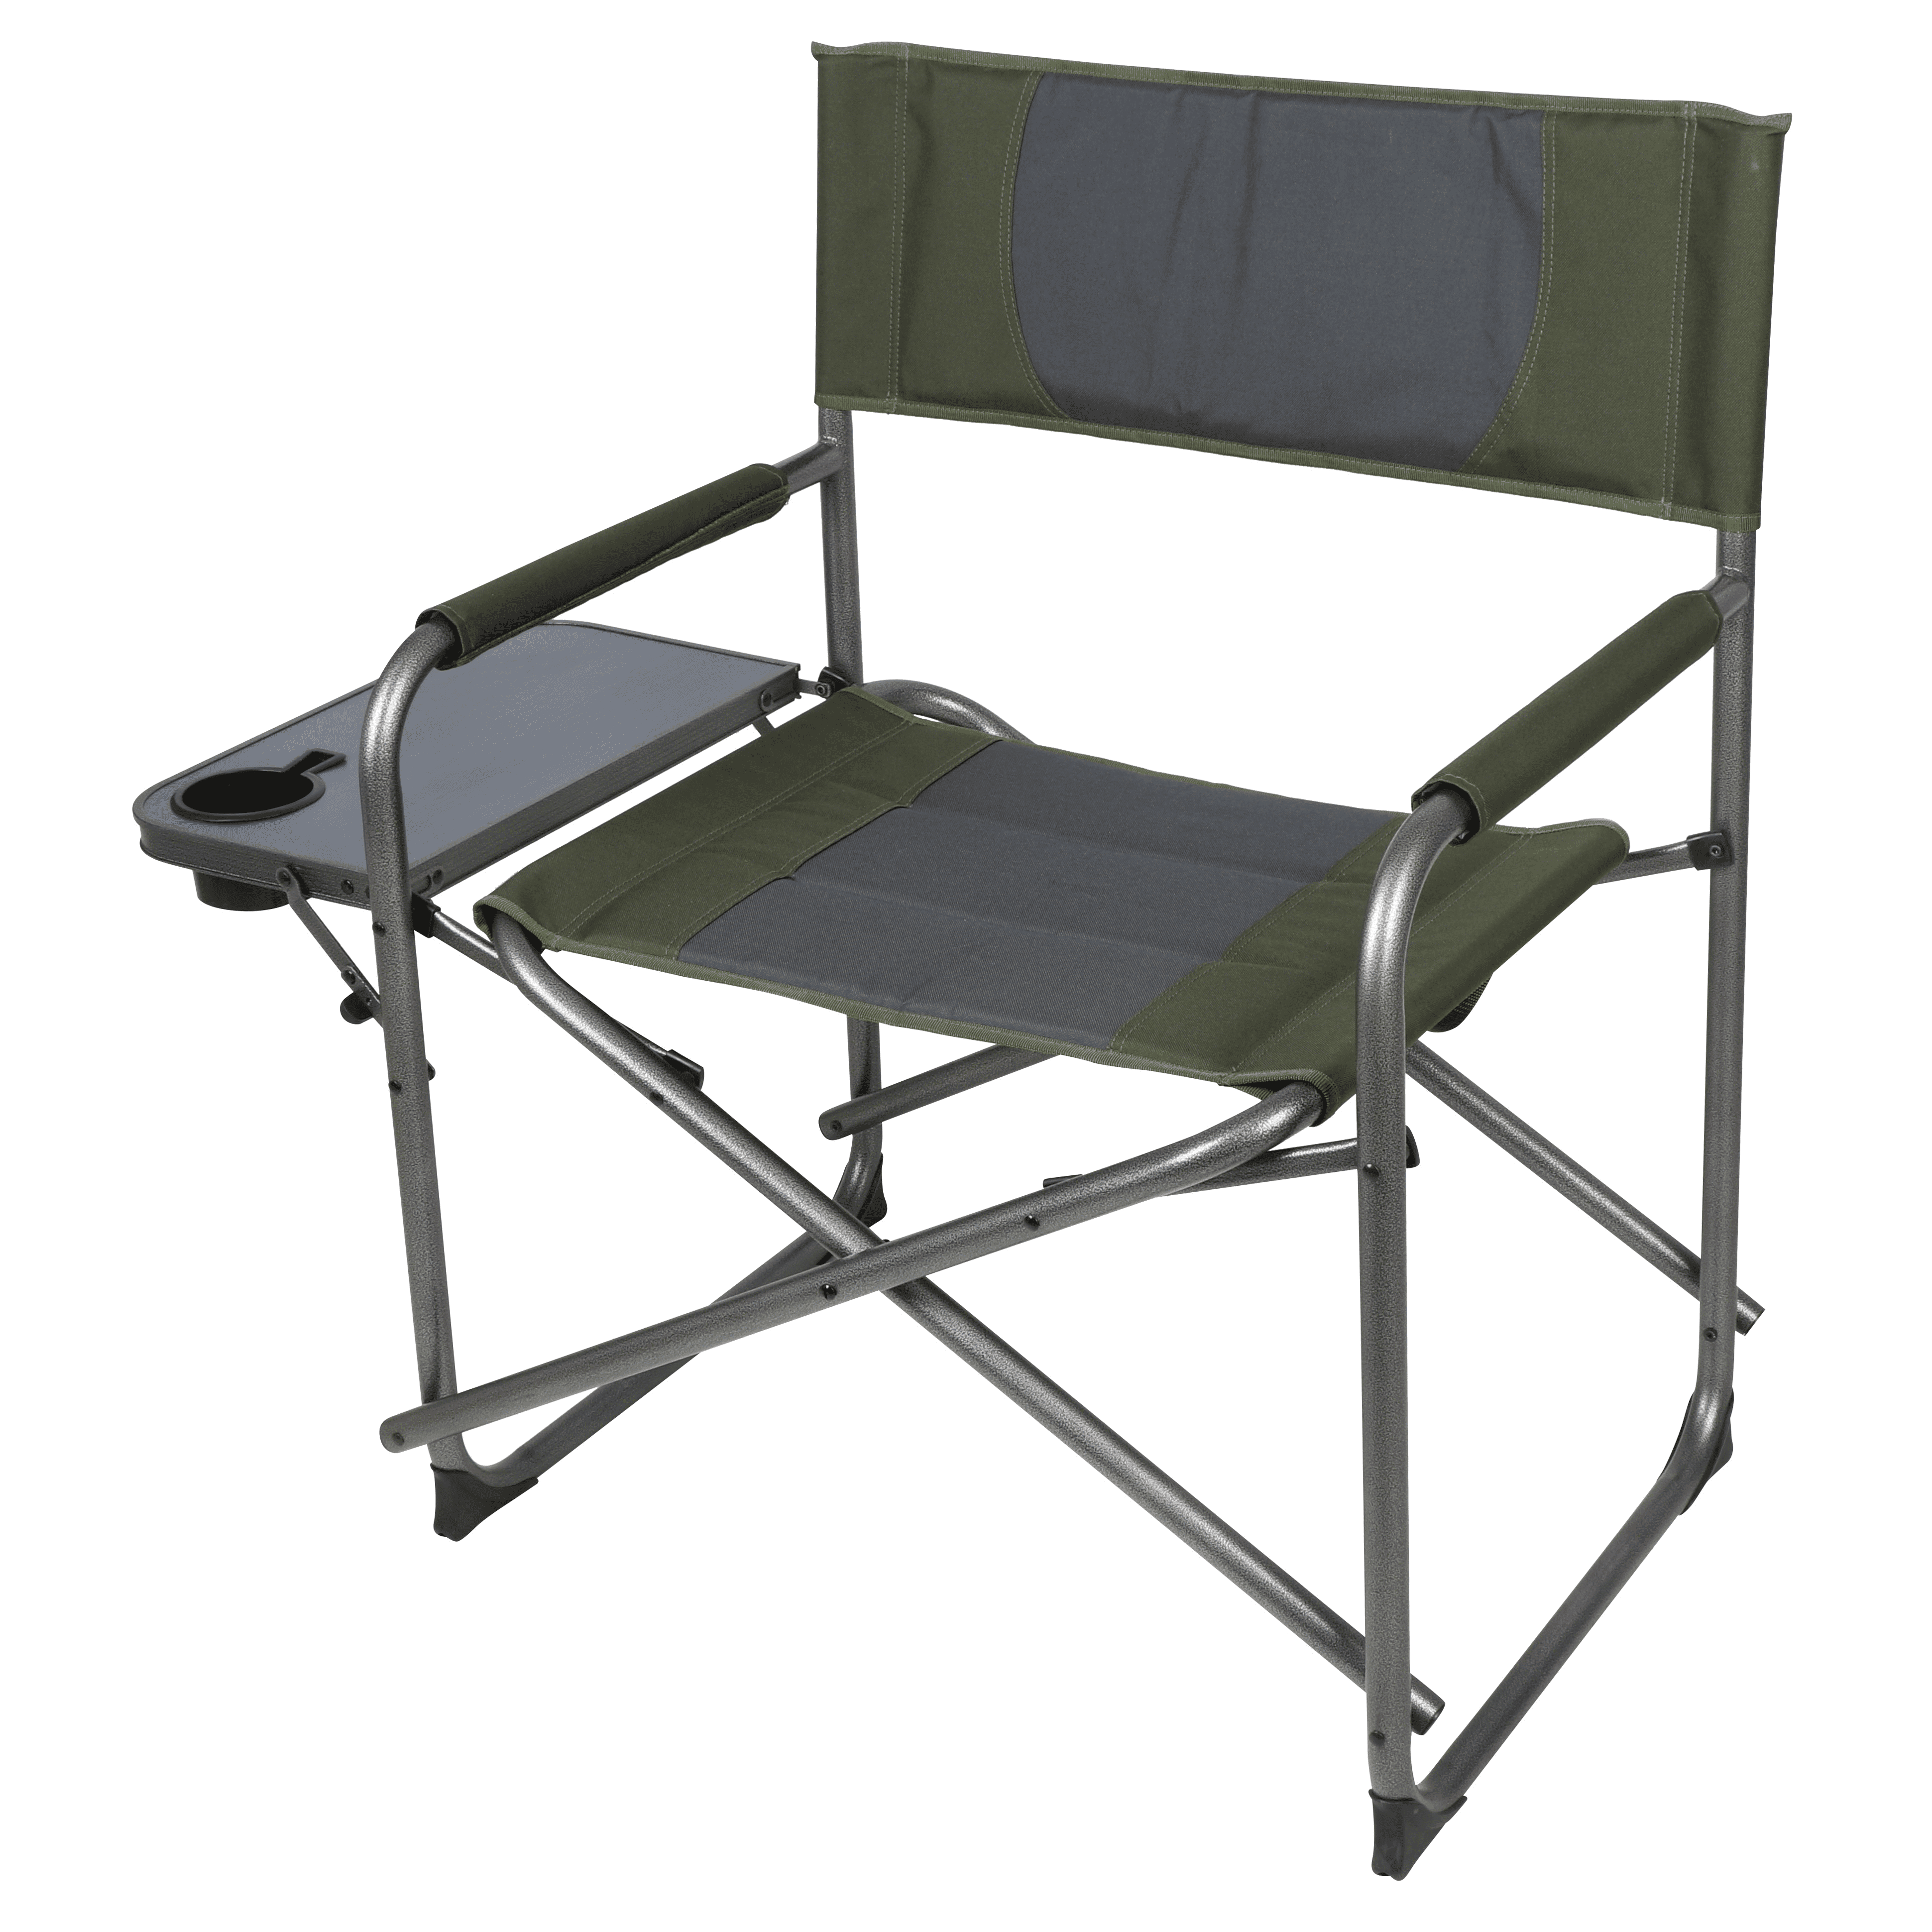 Directors Camping Chair Foldout Side Table Black Heavy Duty Backyard